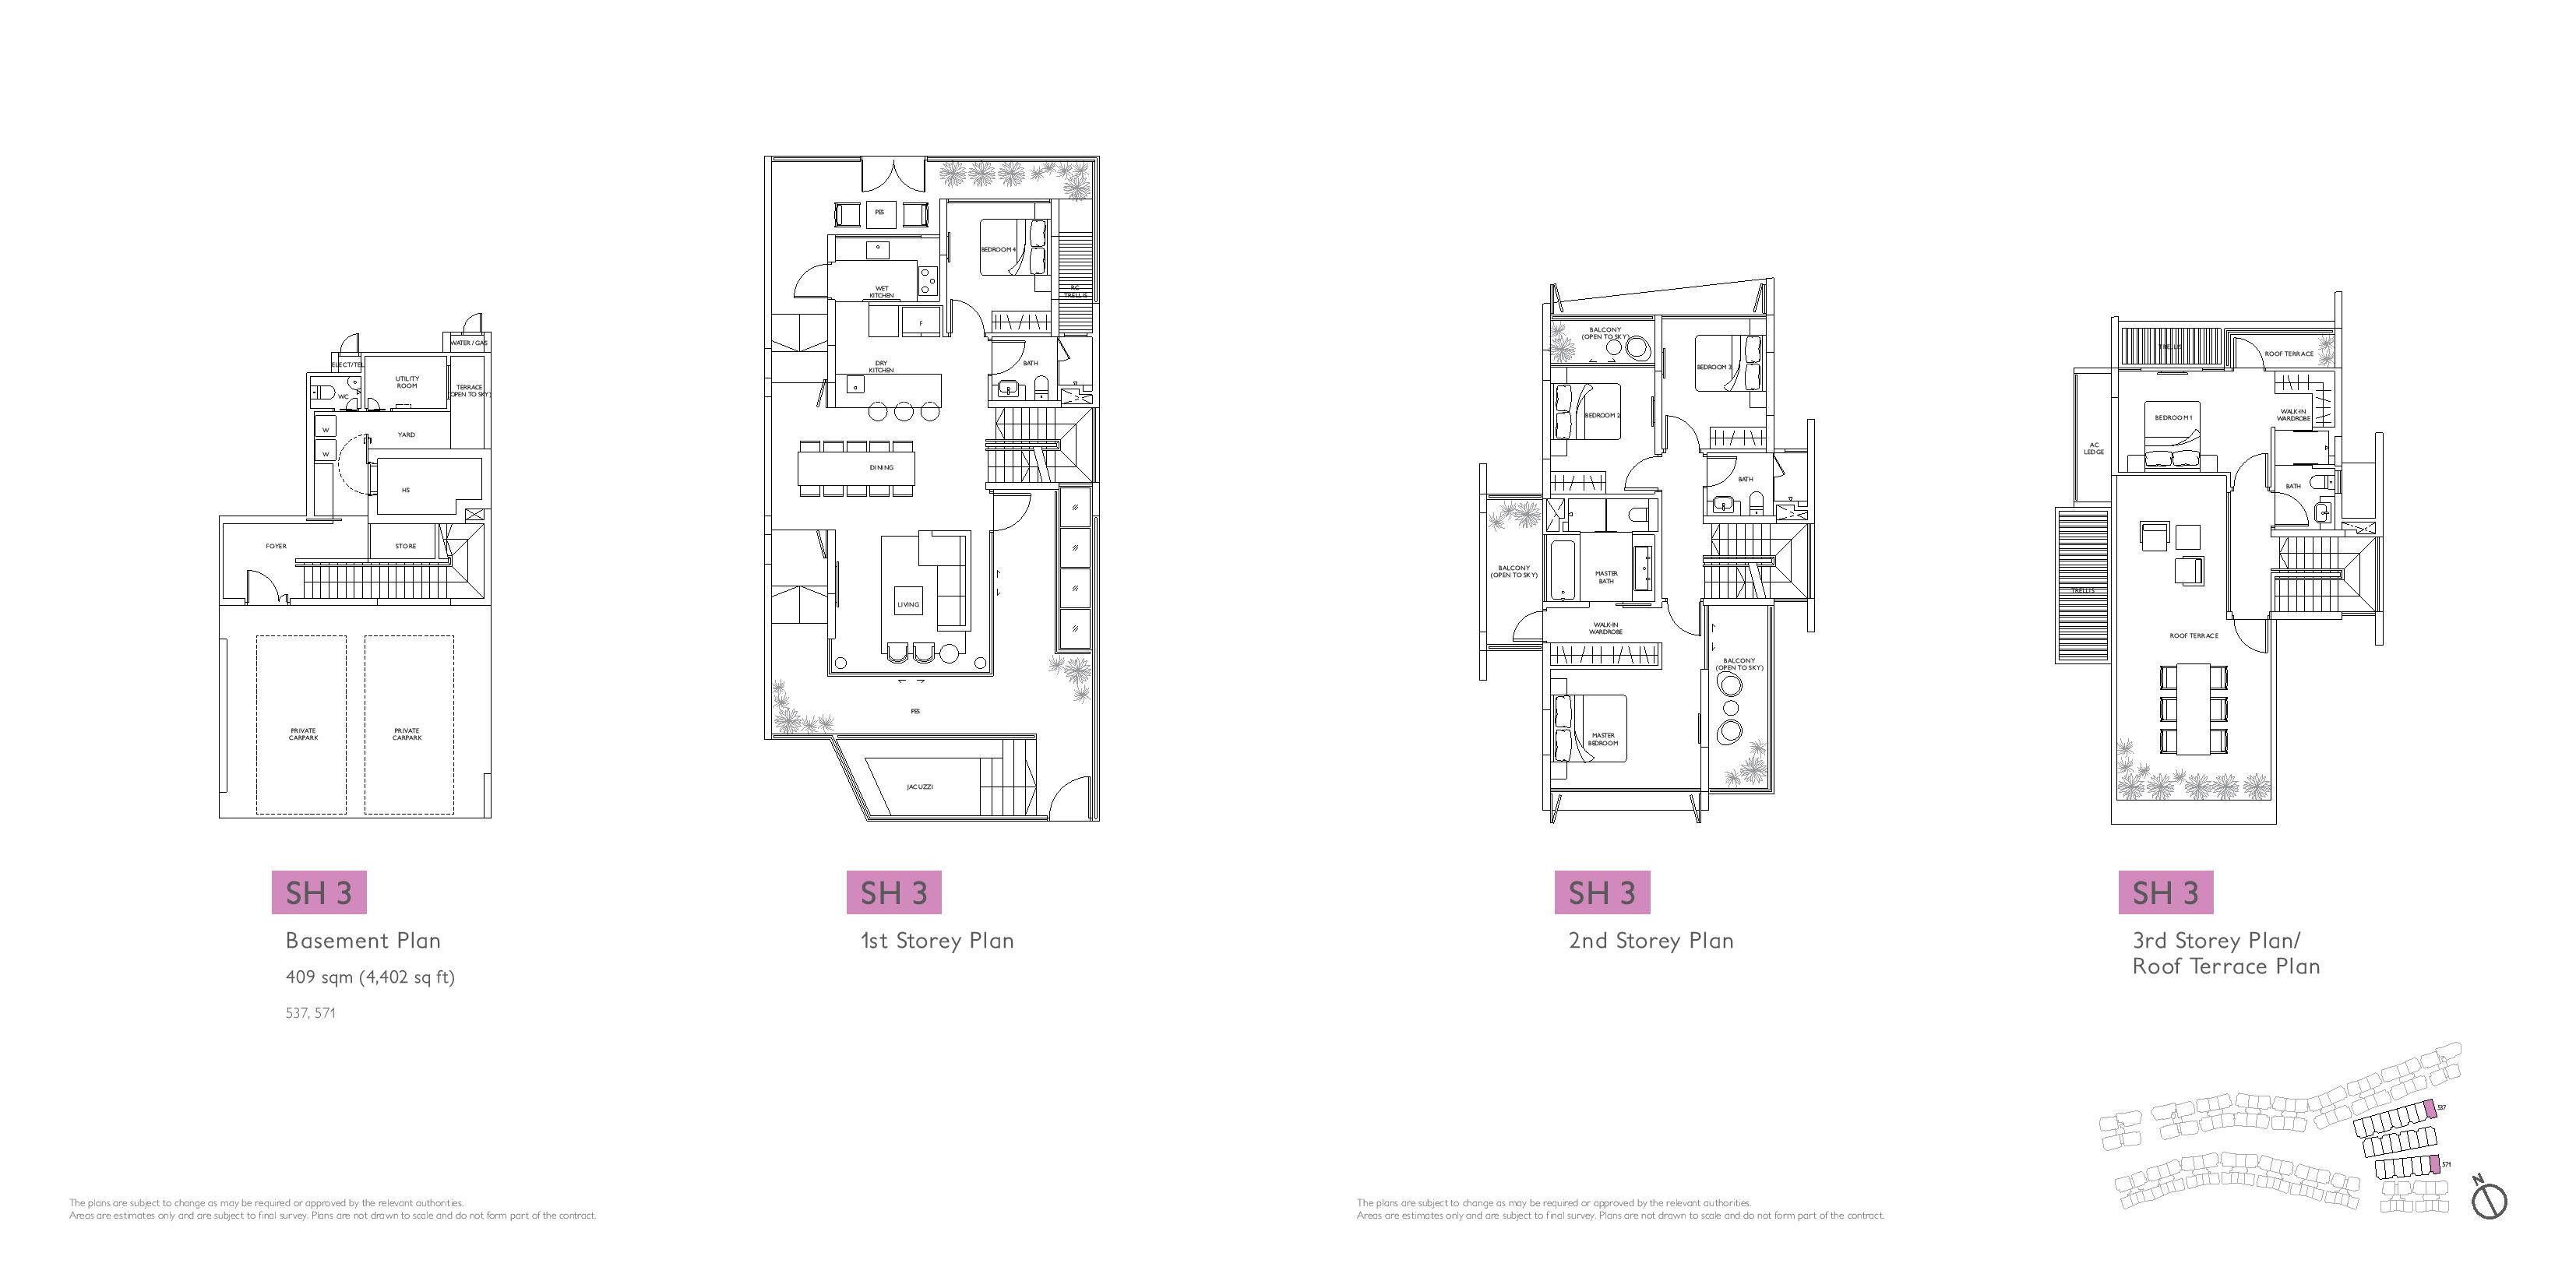 Archipelago 5 Bedroom Strata-Landed House Type SH3 Floor Plans